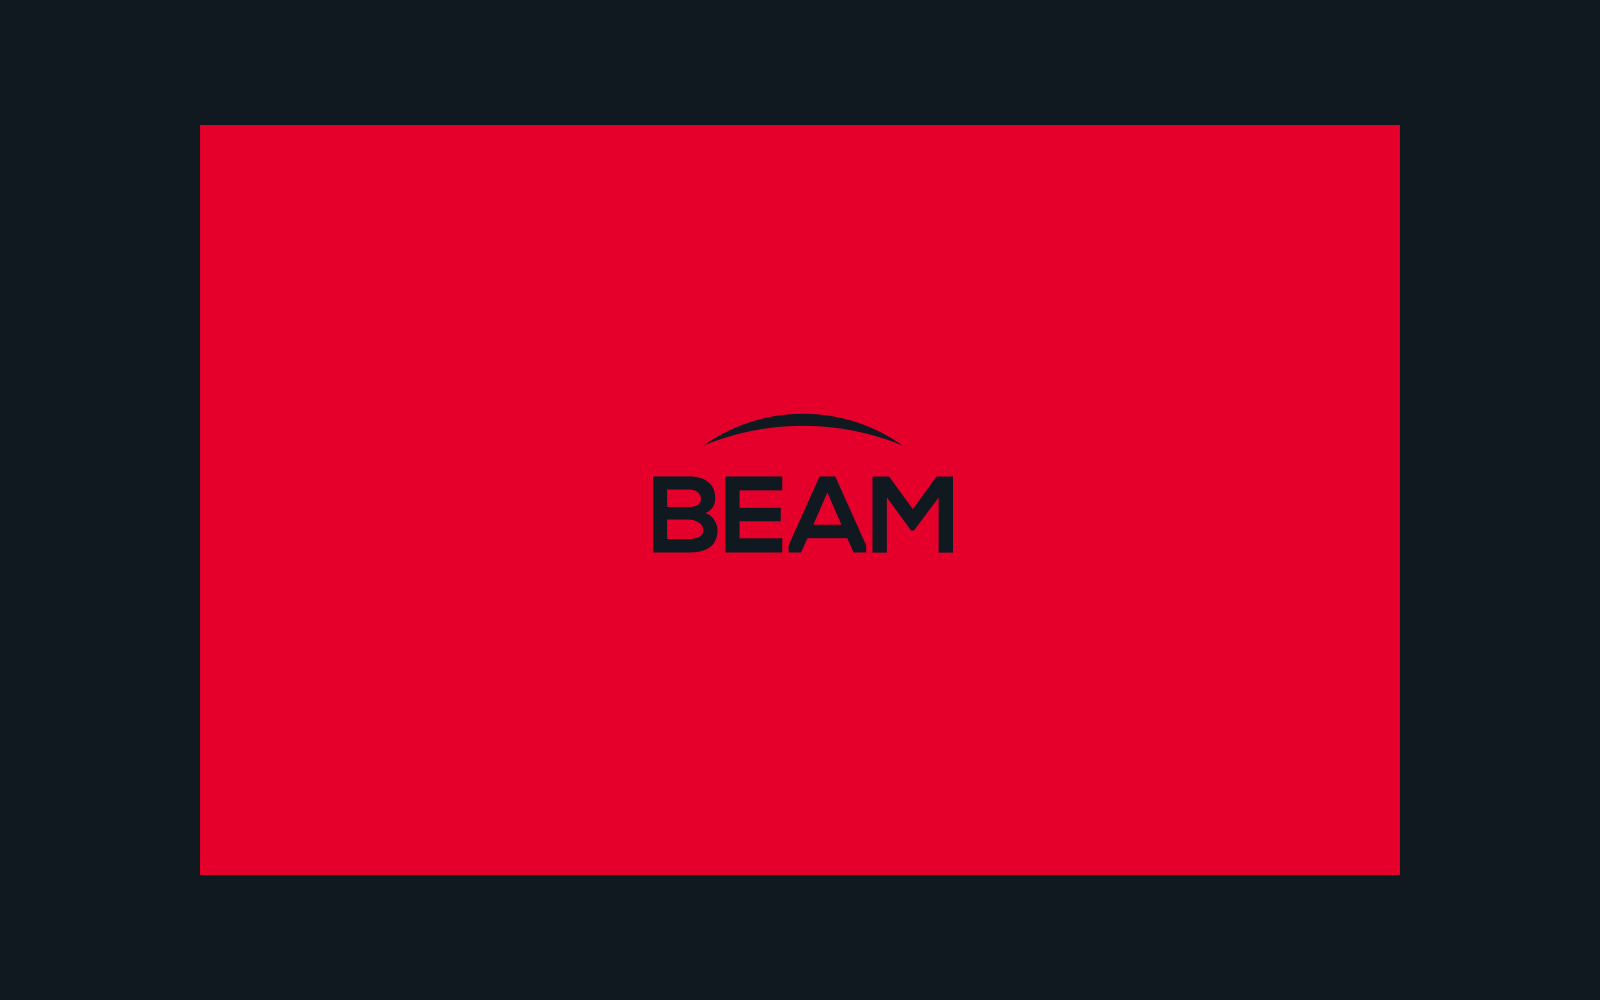 BEAM visual identity by Mark Forscher